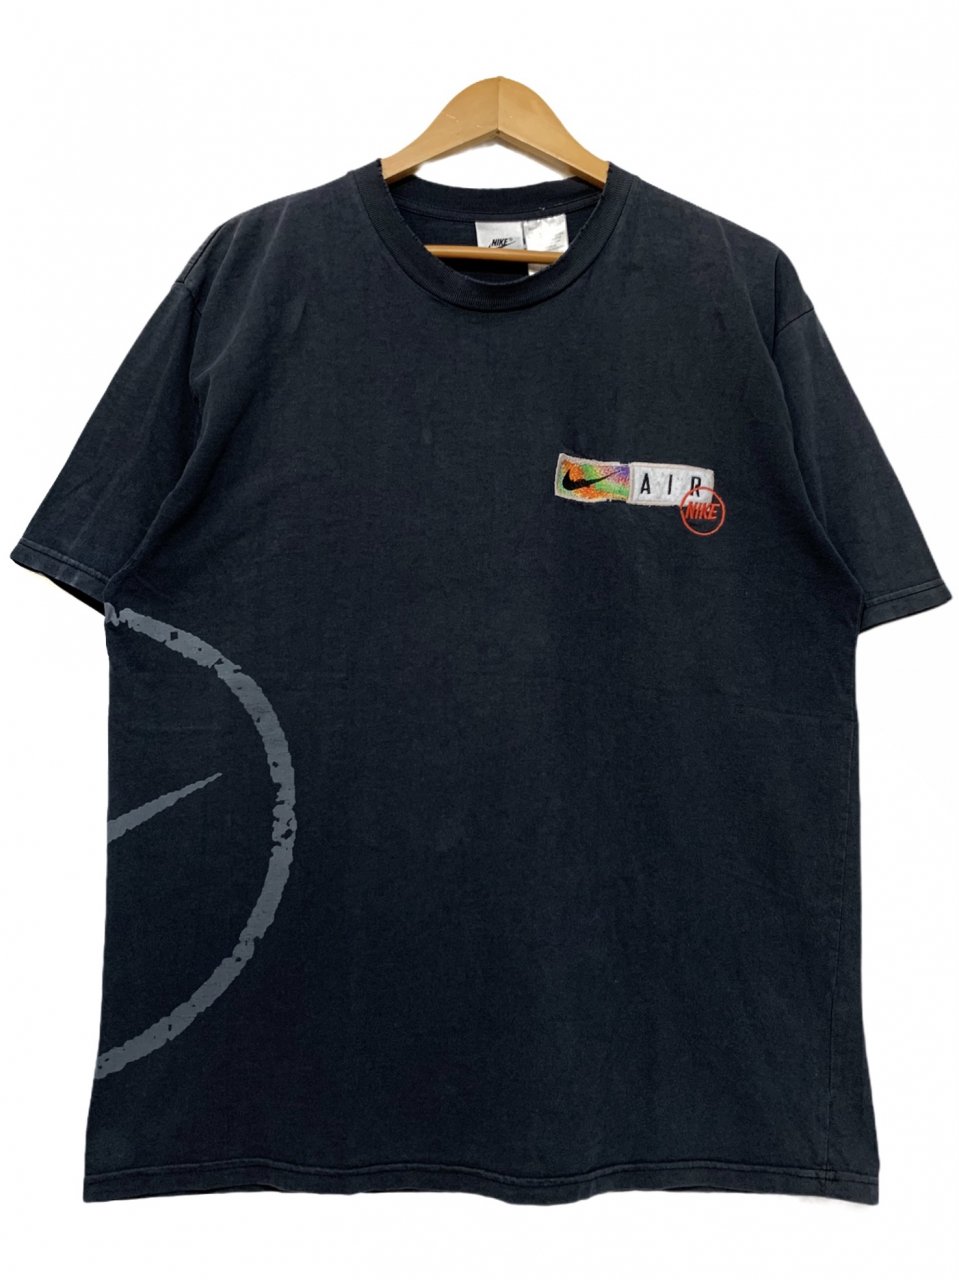 90's NIKE ナイキ tシャツ スウッシュ デカロゴ ブラック